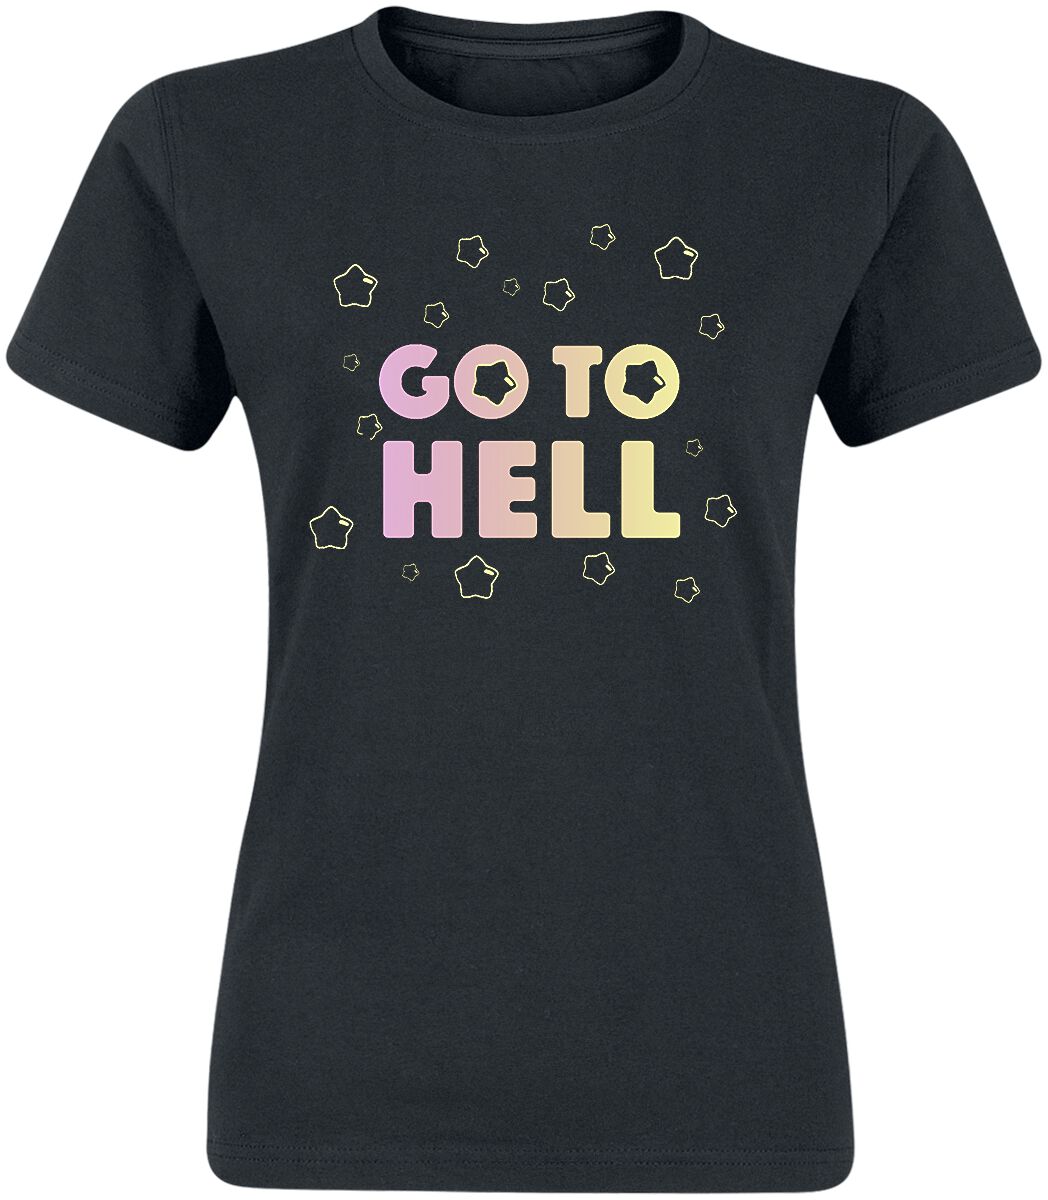 Slogans Fun Shirt - Slogan - Go To Hell T-Shirt black